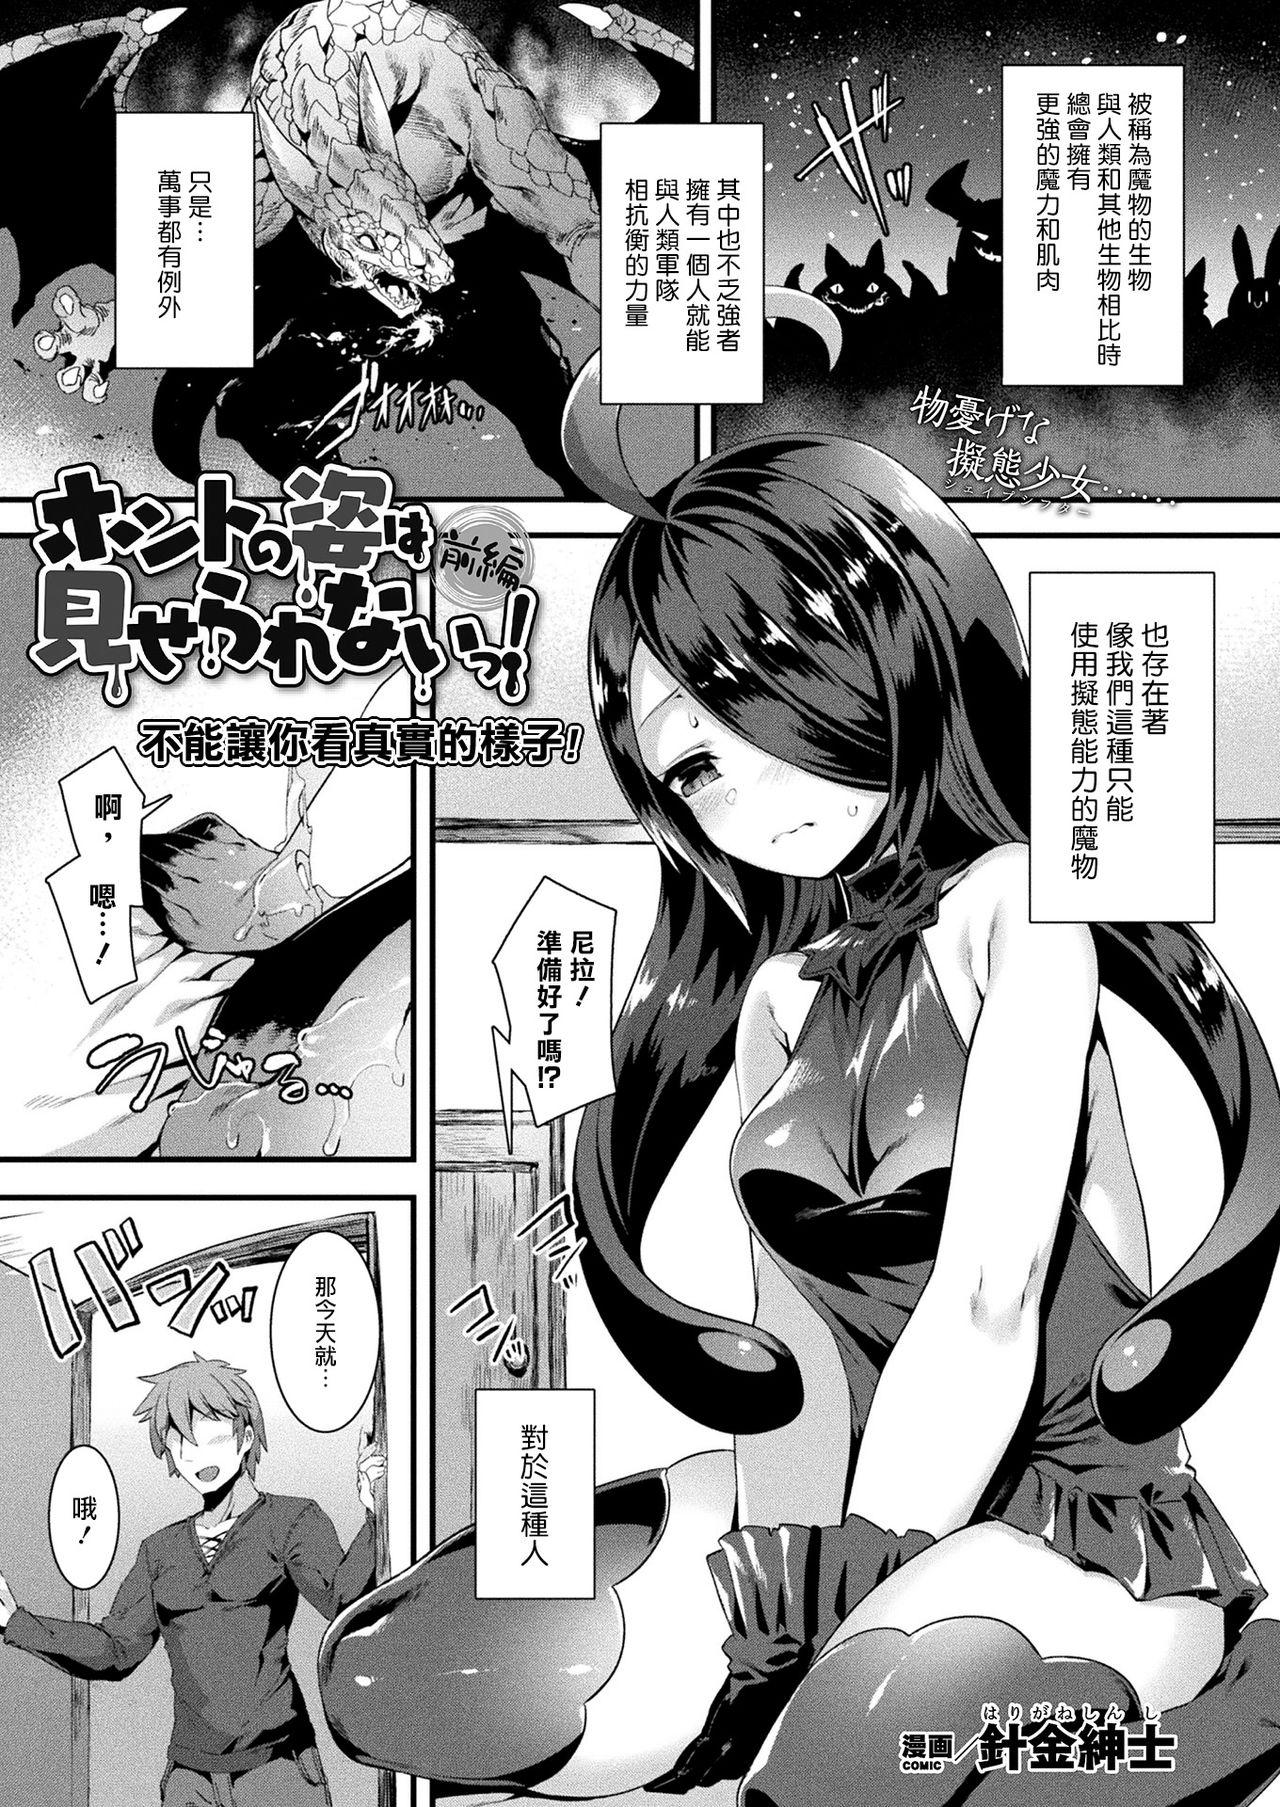 Belly Honto no Sugata wa miserarenai! Zenpen Negra - Page 2